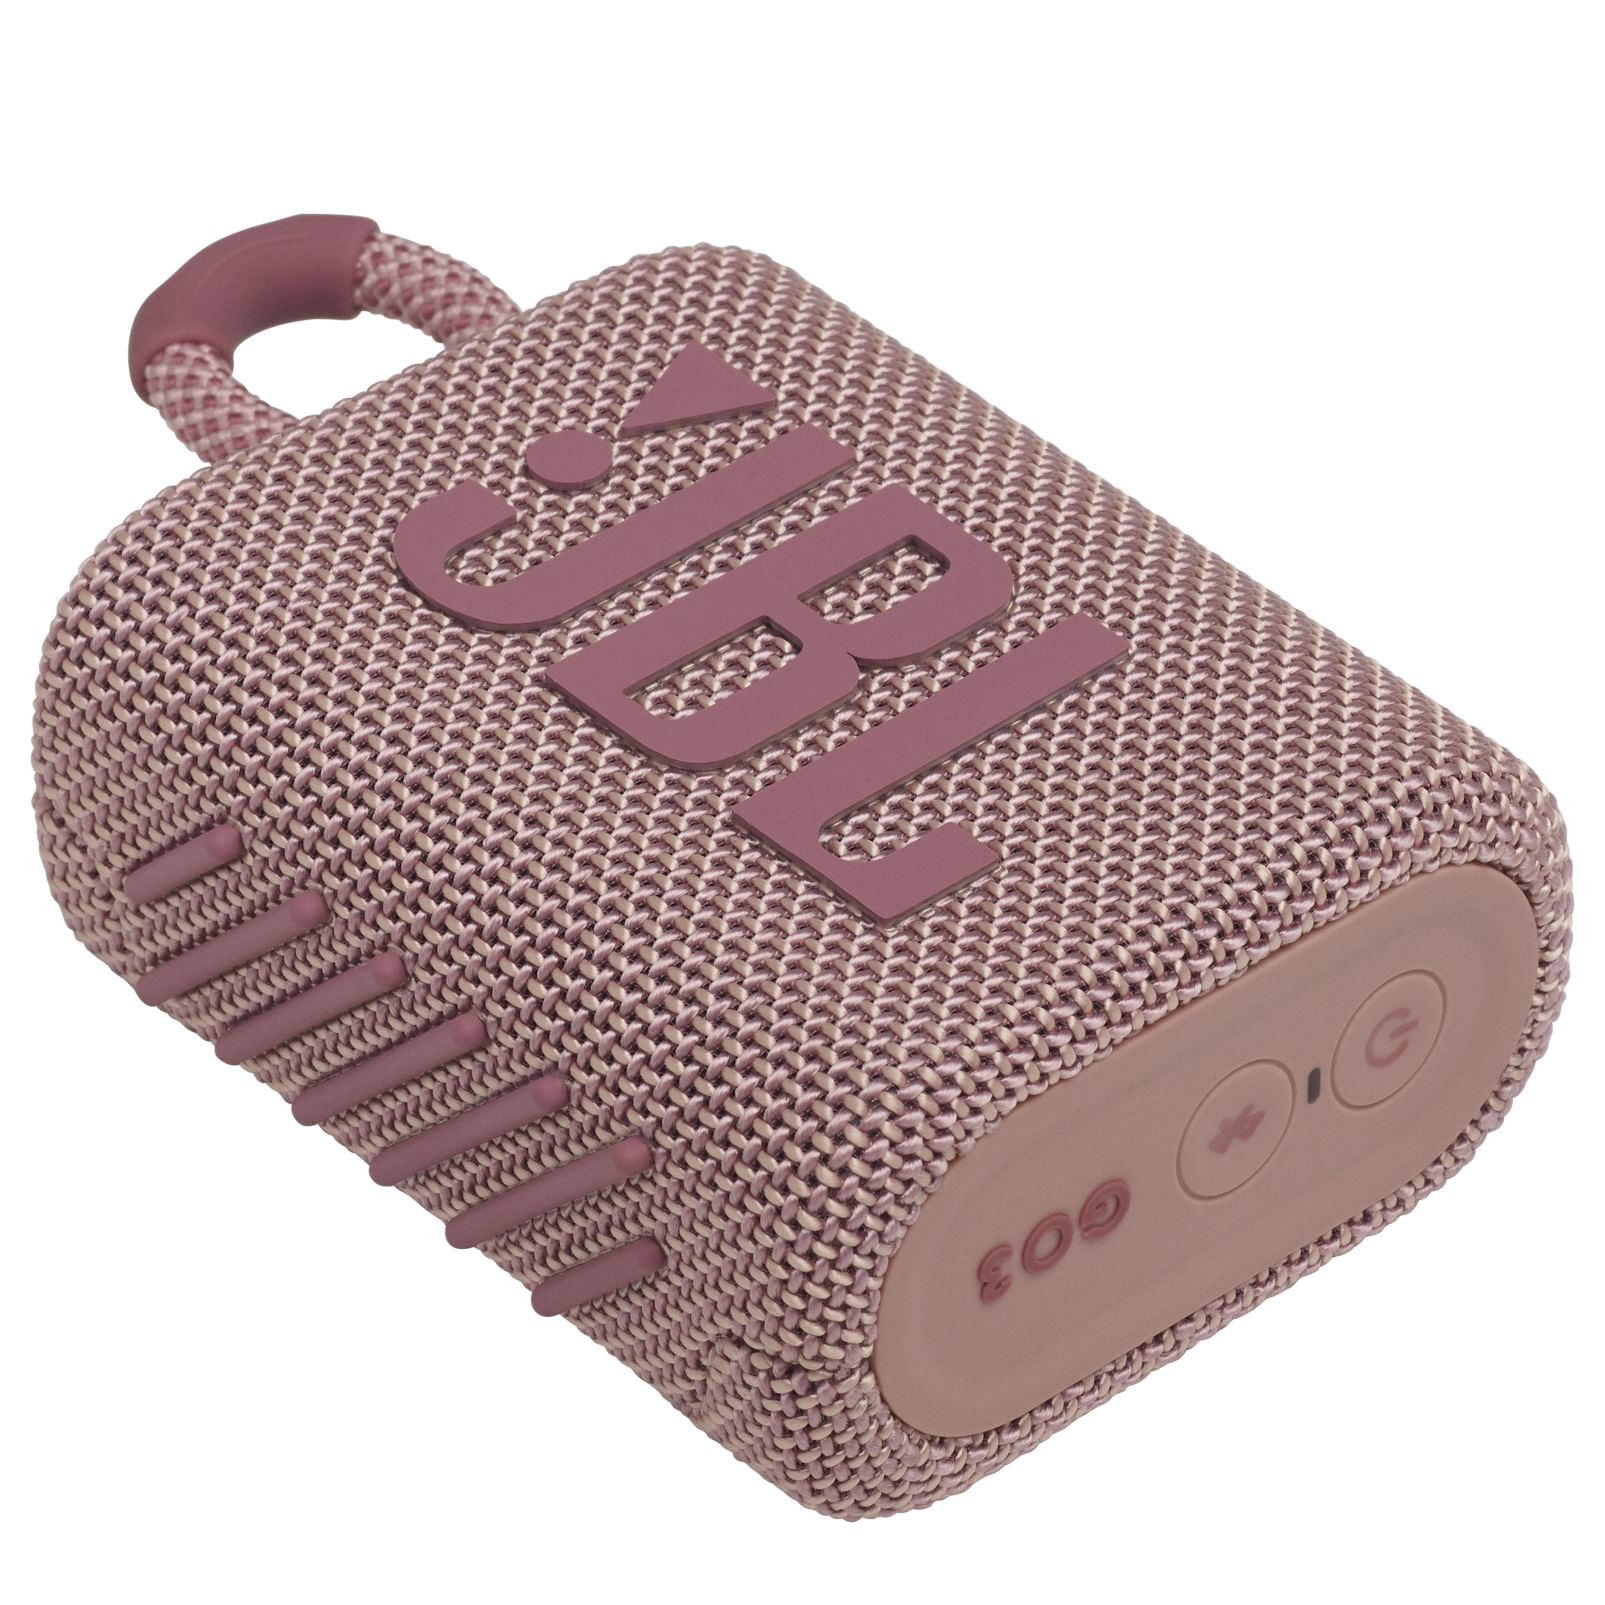 JBL Go 3 - Pink - Portable Waterproof Speaker - Detailshot 3